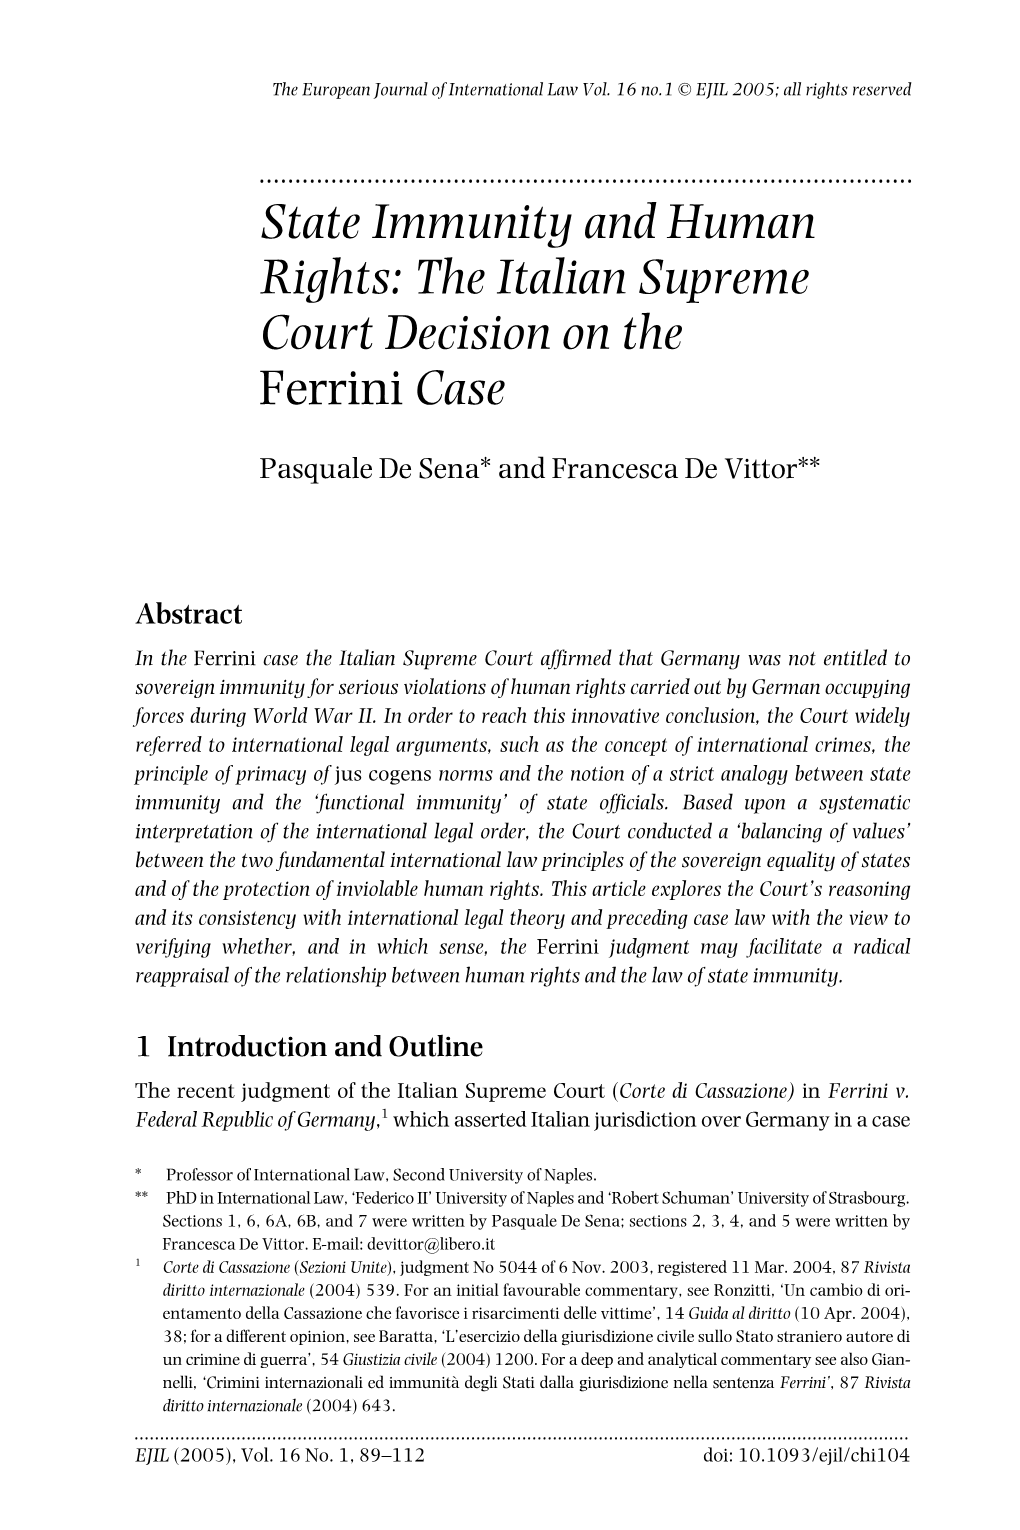 The Italian Supreme Court Decision on the Ferrini Case